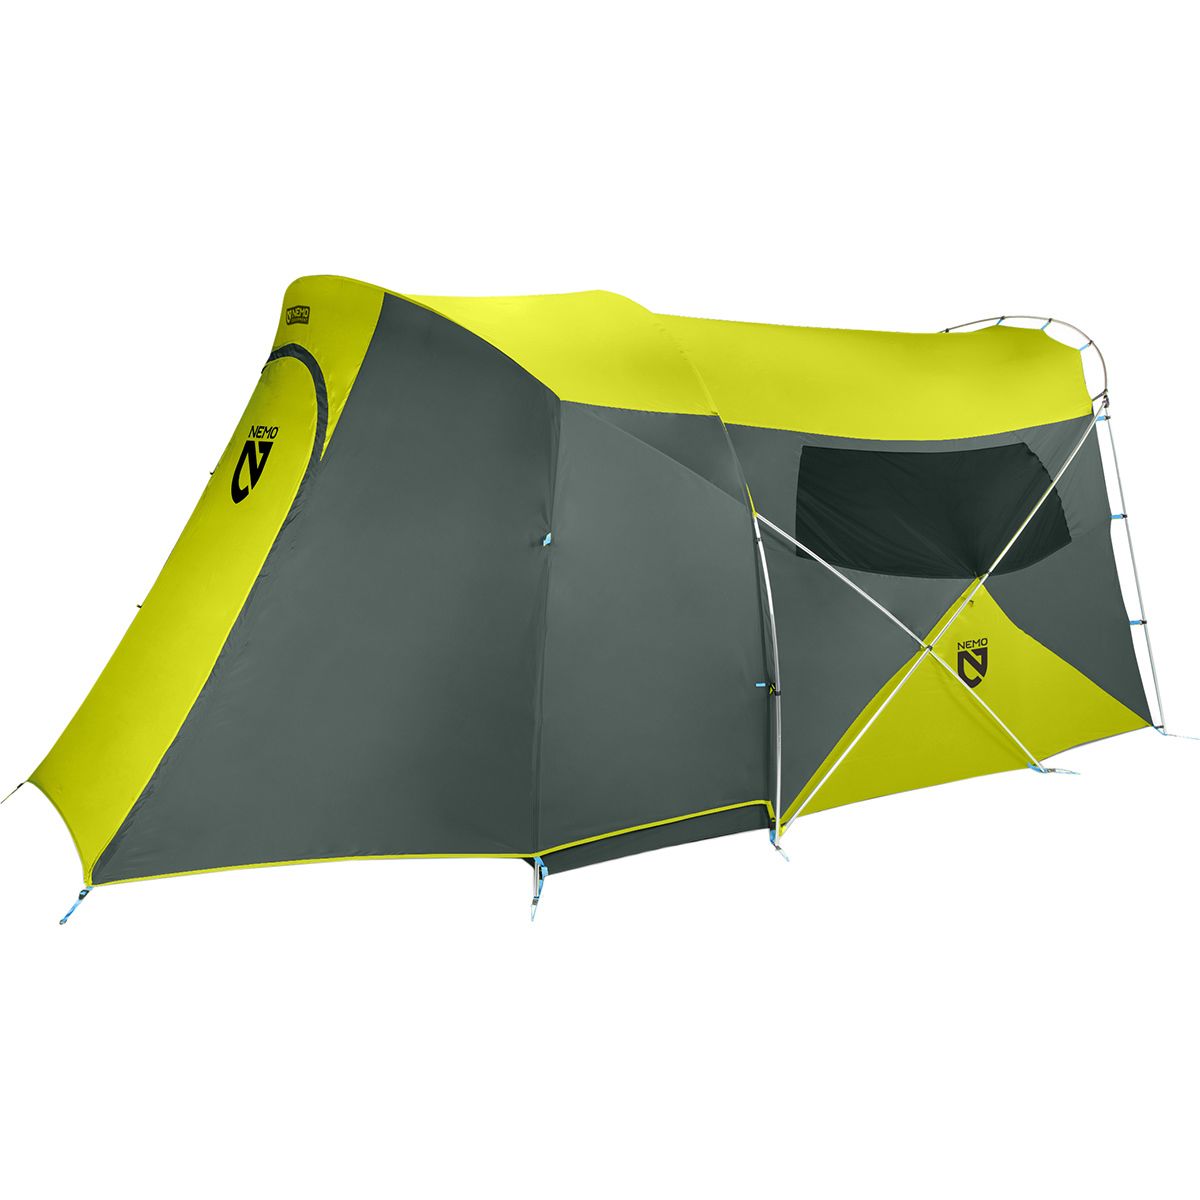 NEMO Equipment Inc. Wagontop 6P Tent: 6-Person 3-Season